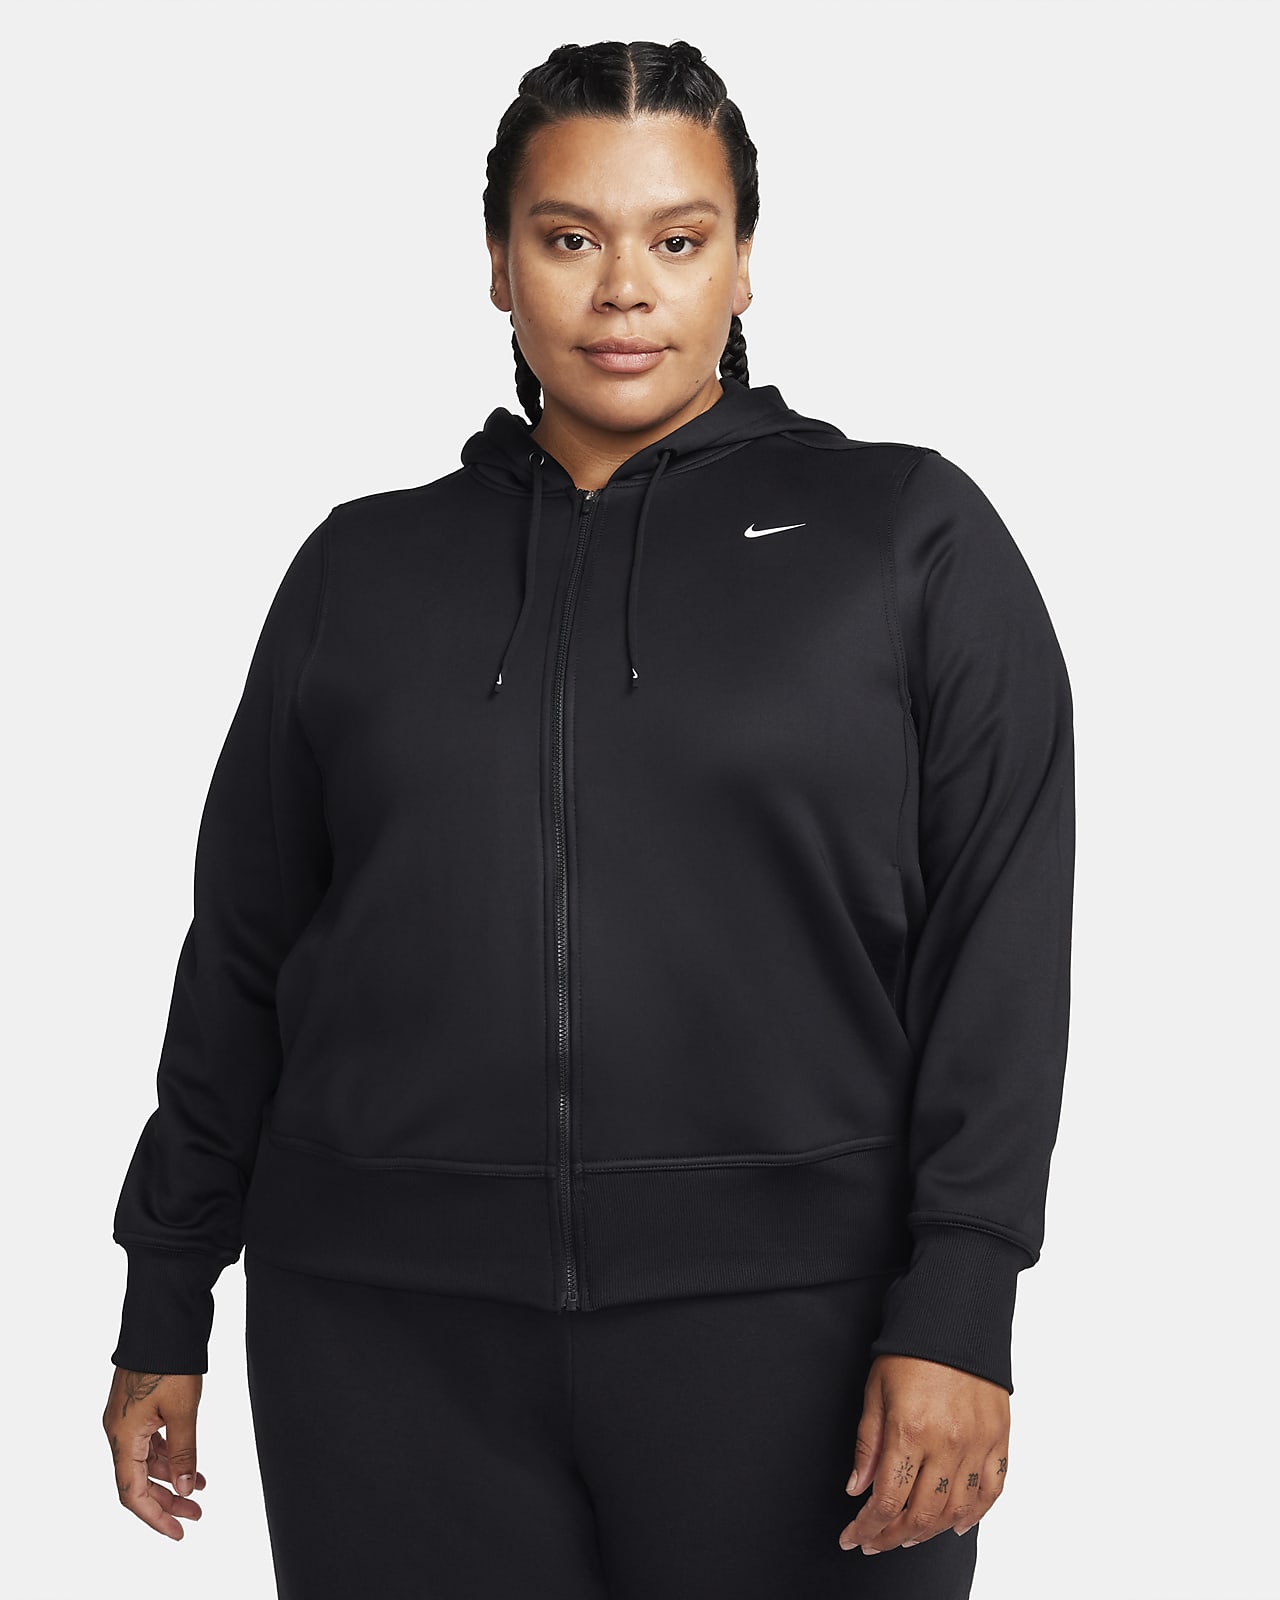 Sudadera Nike - Negro - Sudadera Cremallera Mujer